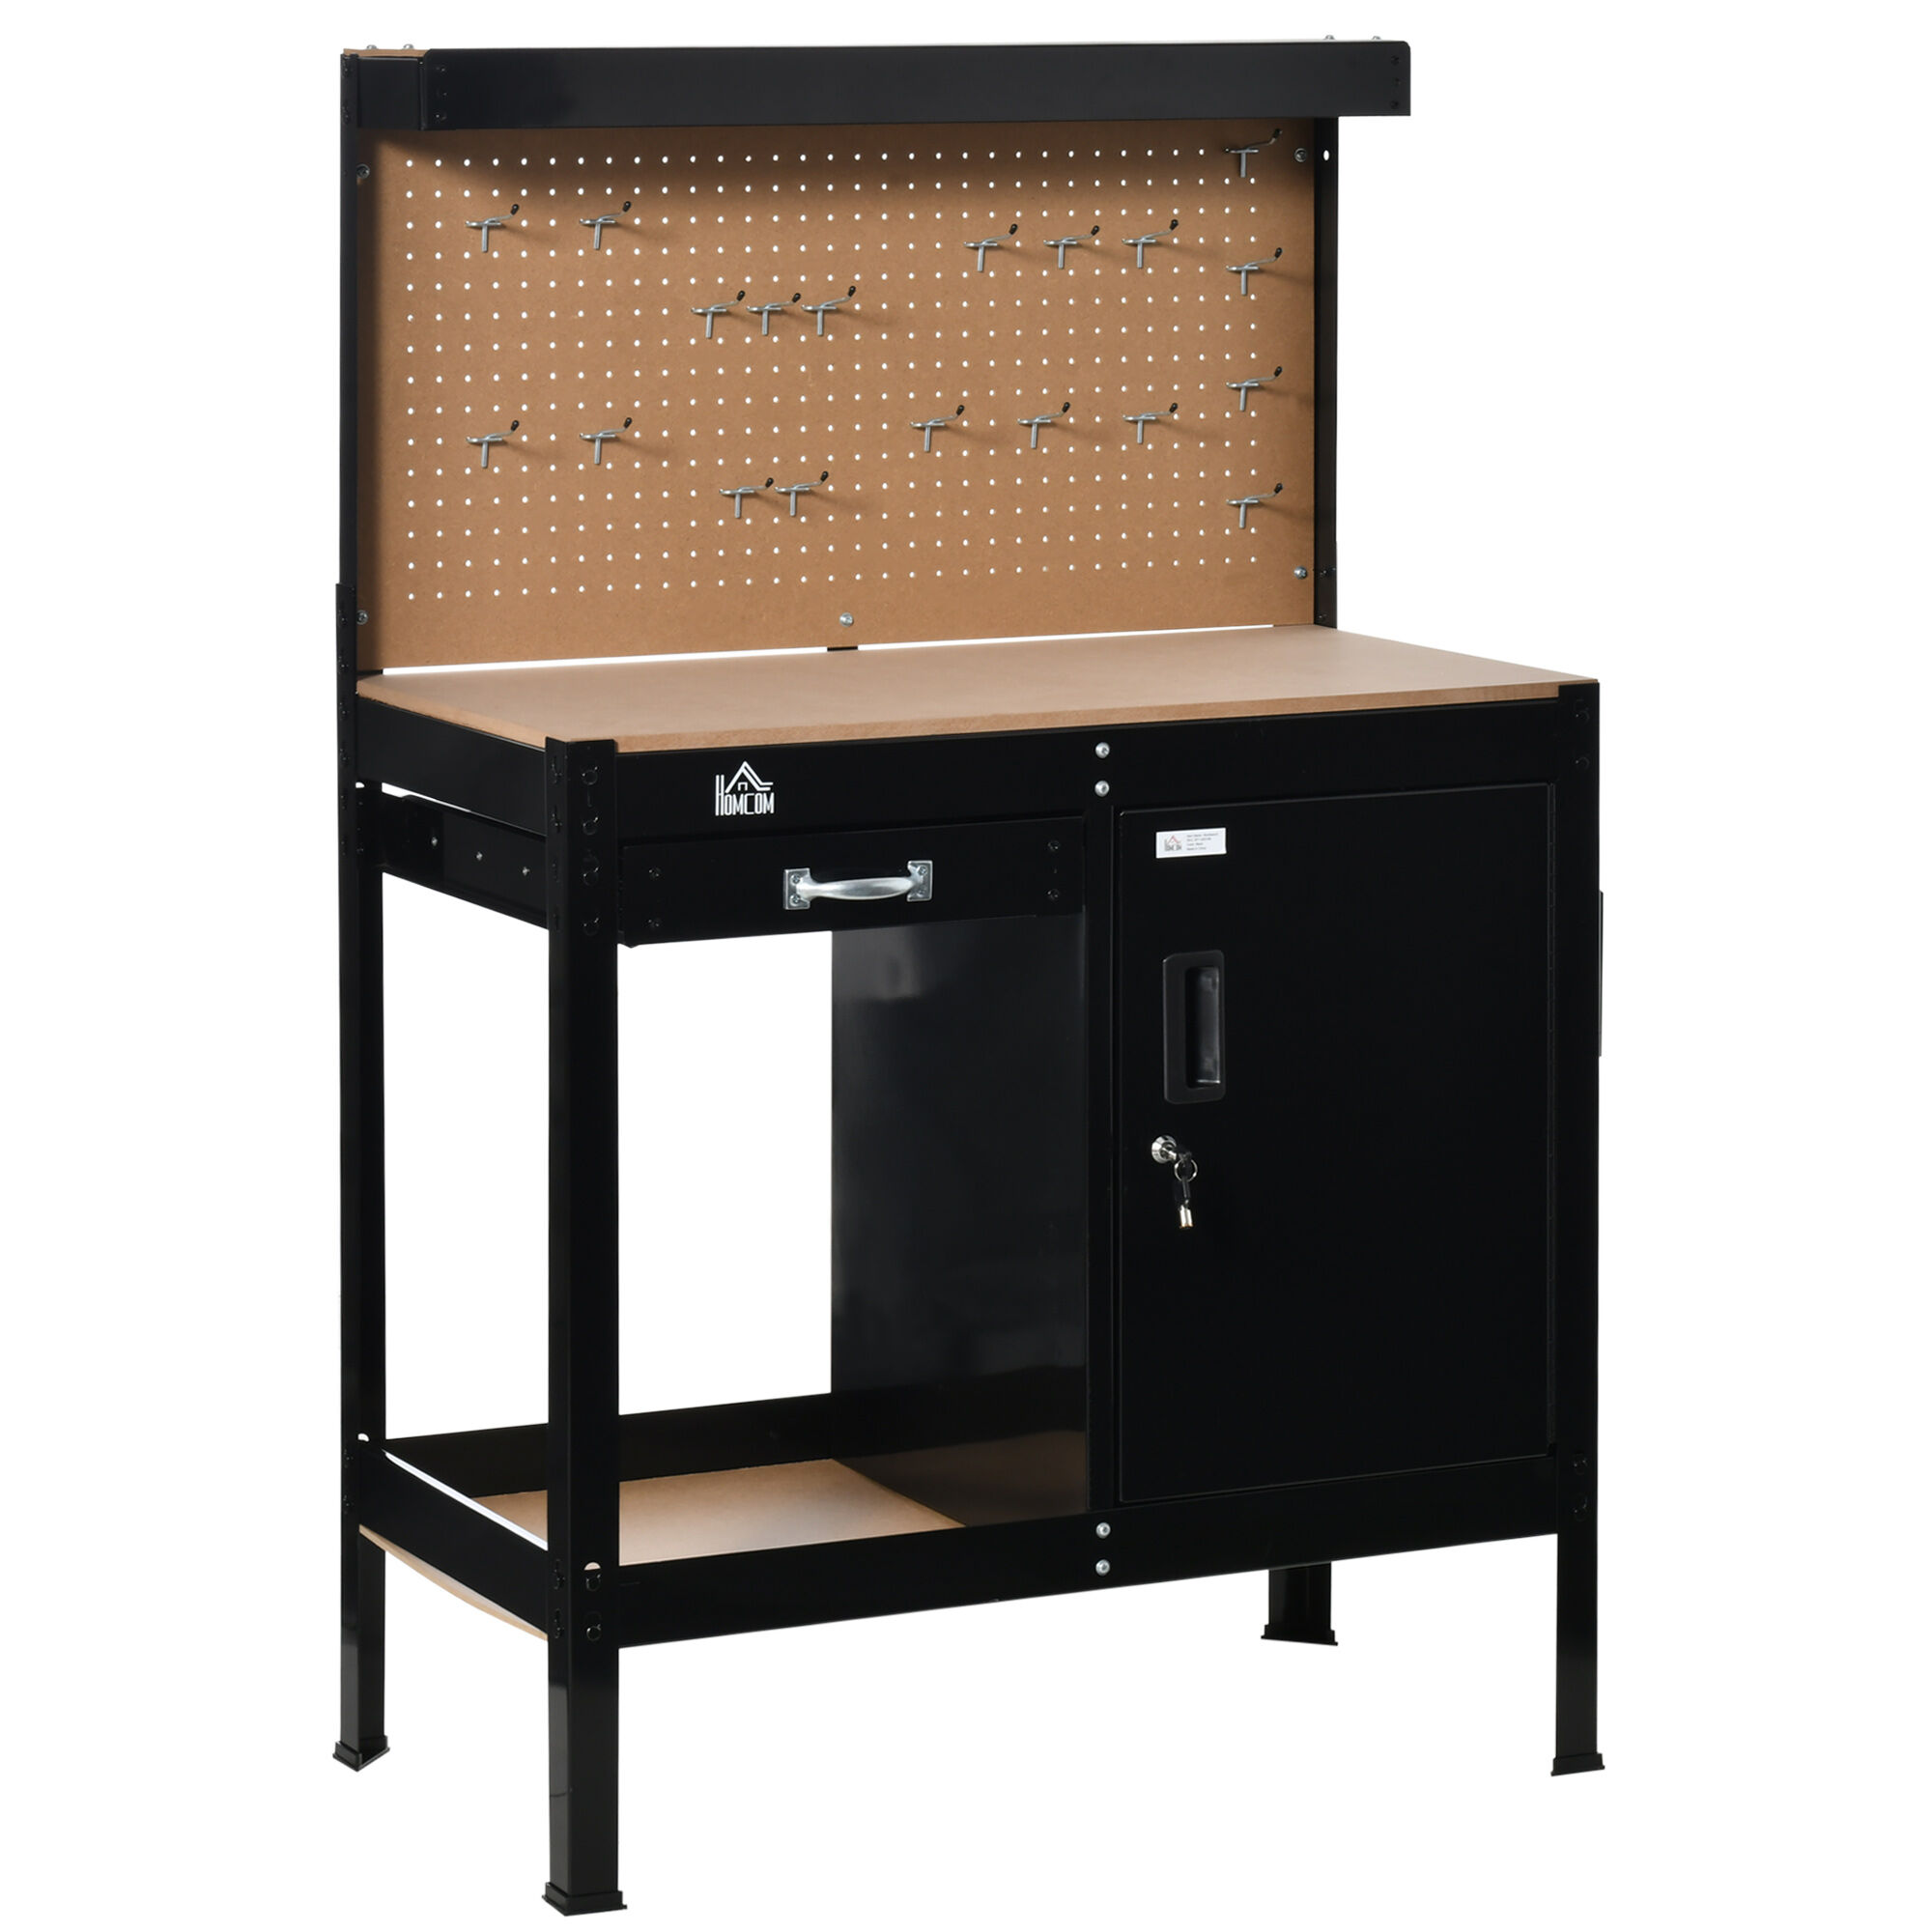 HOMCOM Multipurpose Work bench, Workshop Tools Table with Drawer, Peg Board Storage Cabinet with Keys, Black